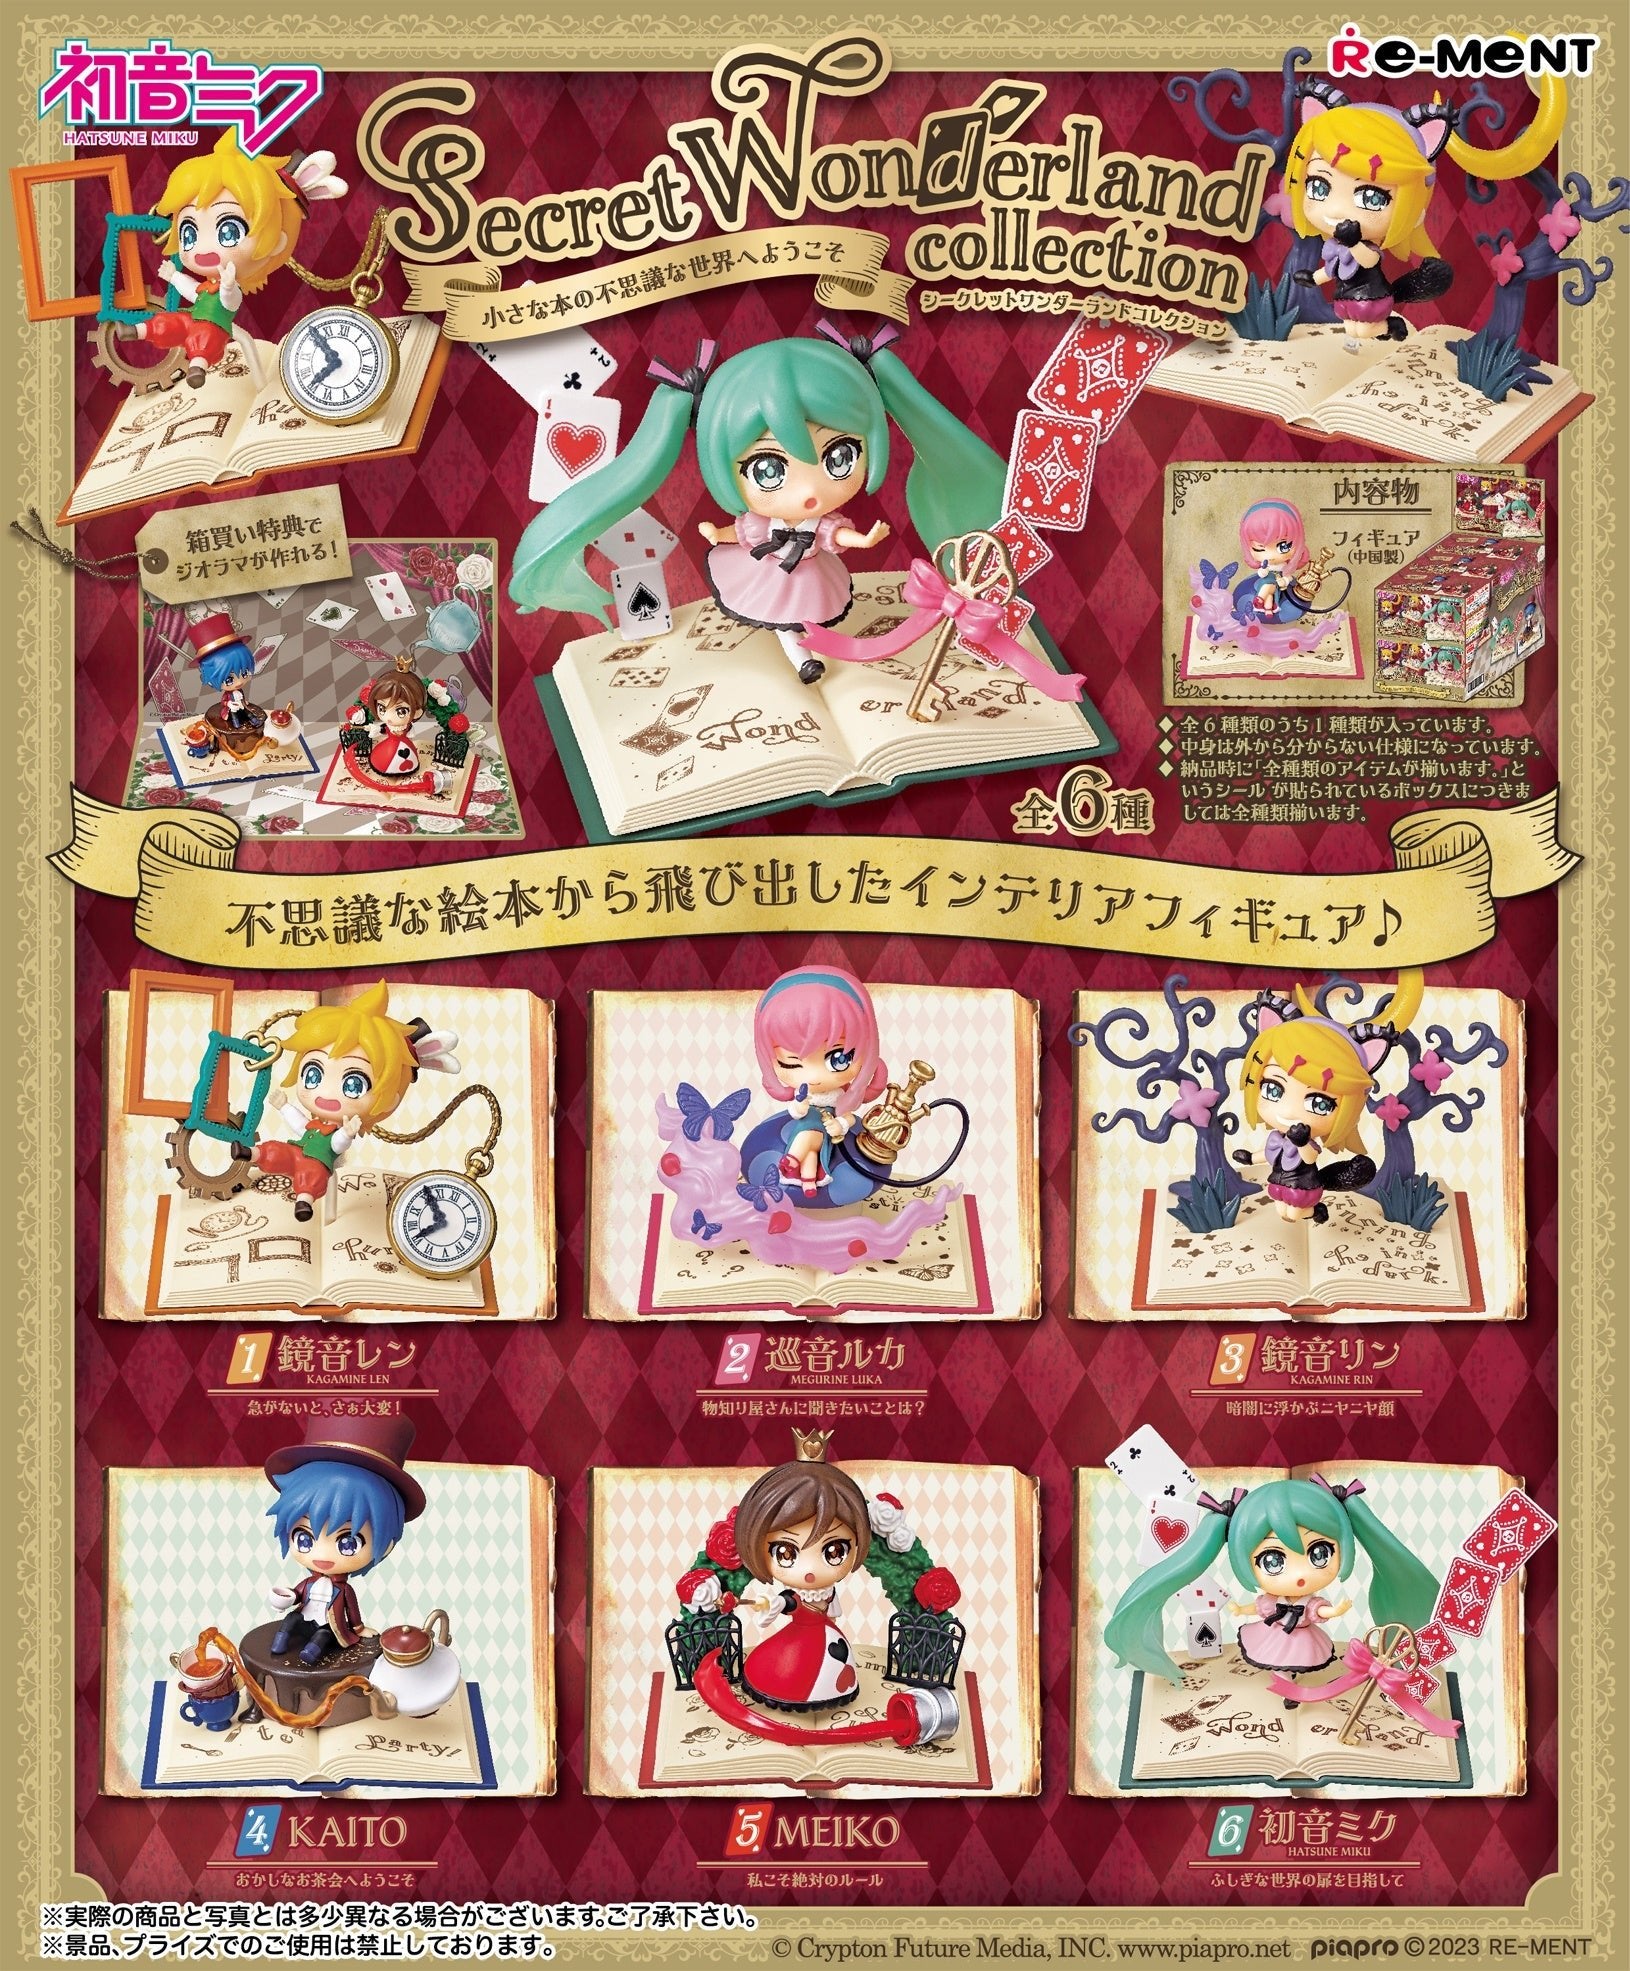 Re-Ment - Hatsune Miku Series: Secret Wonderland Collection: 1 Random Pull - Good Game Anime